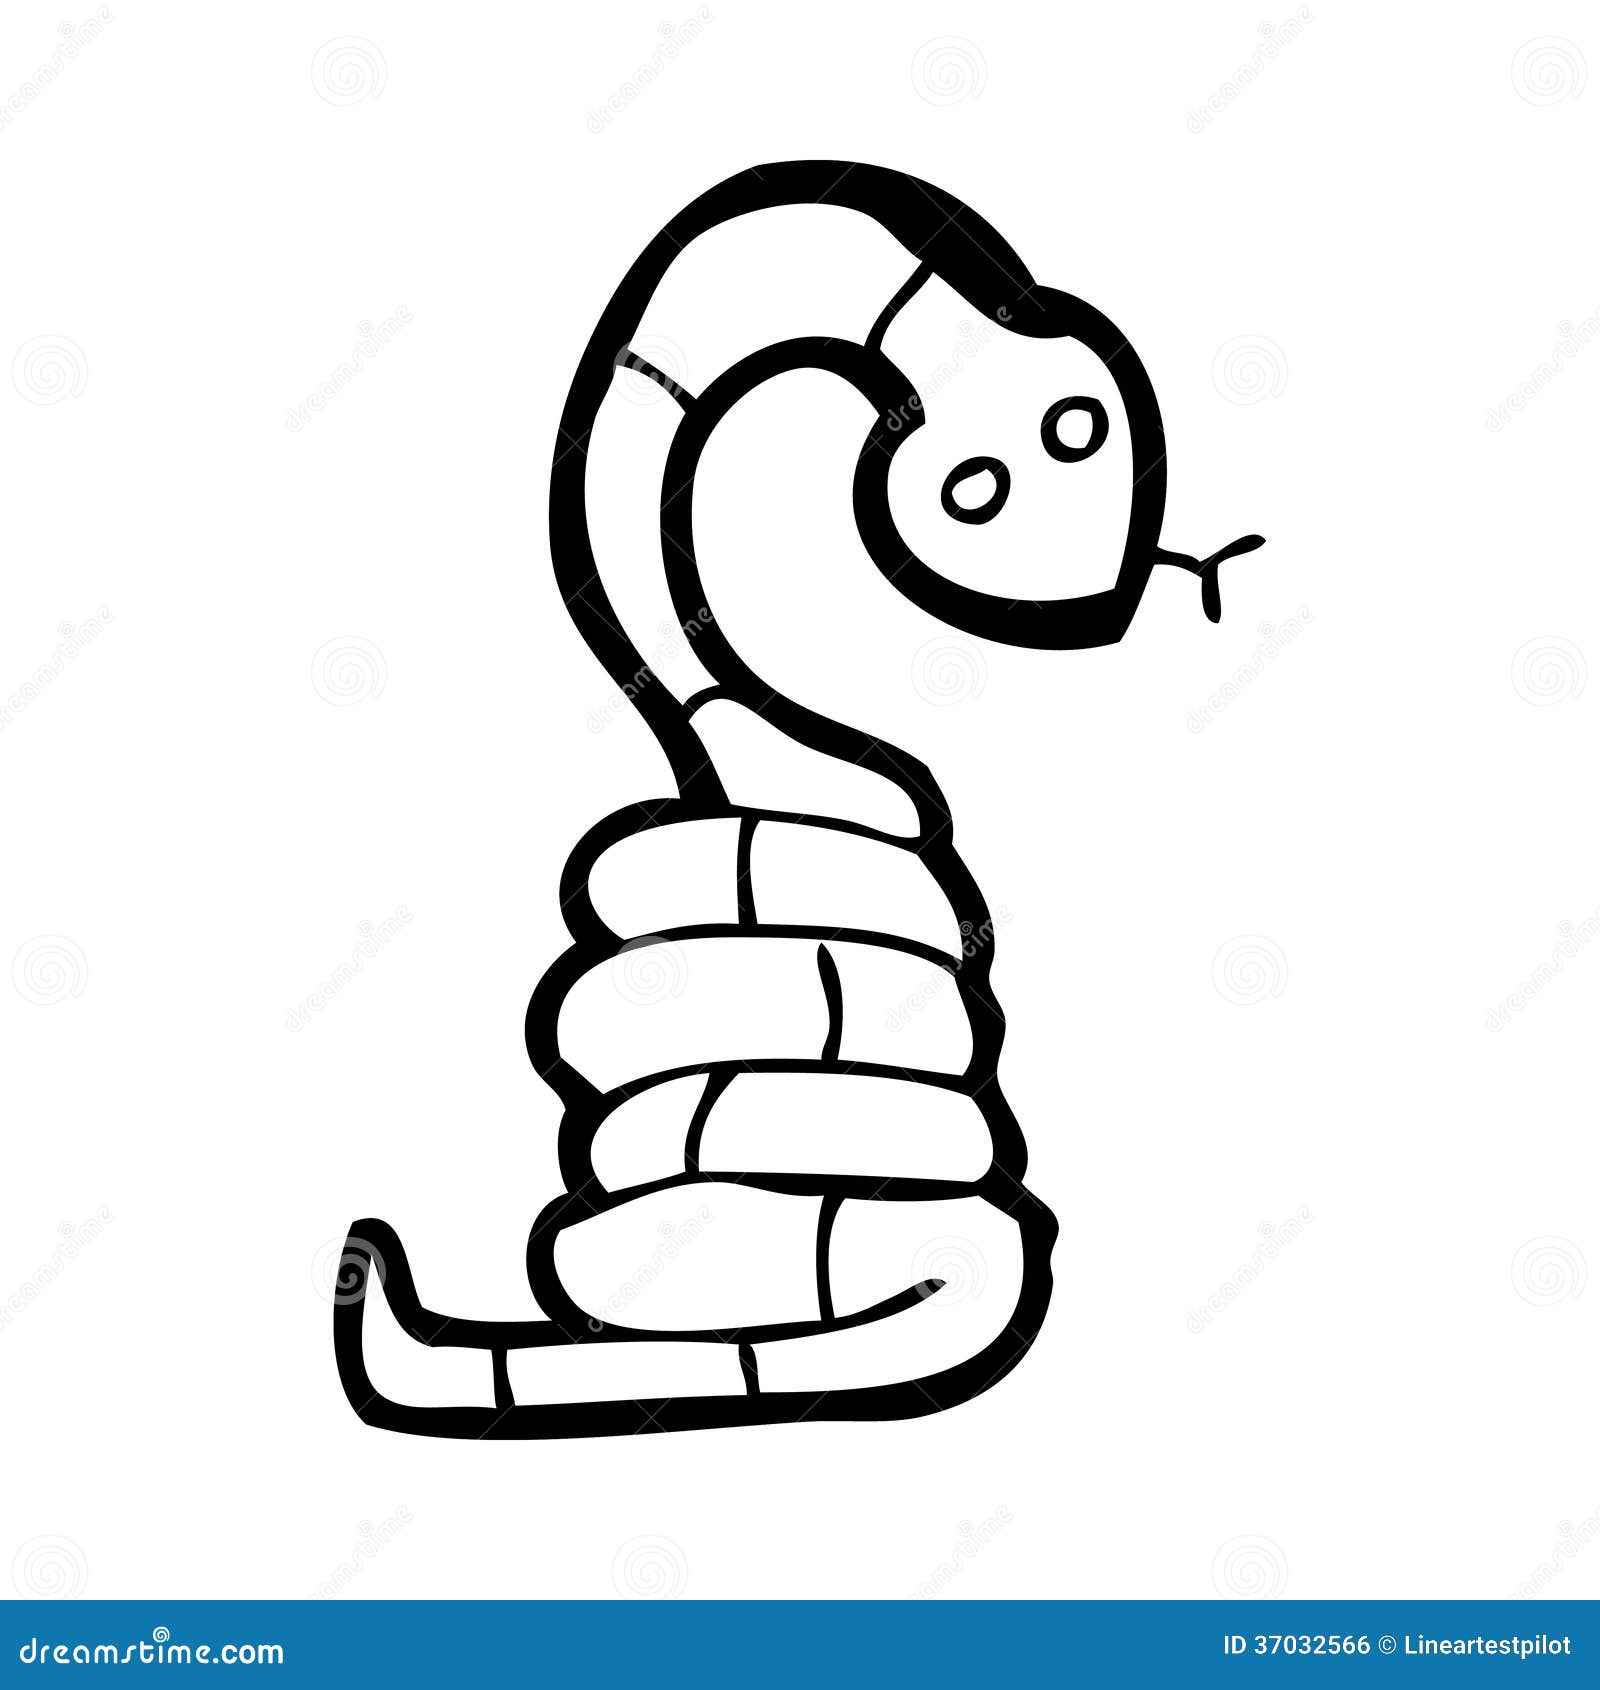 Cartoon snake stock illustration. Illustration of character - 37032566